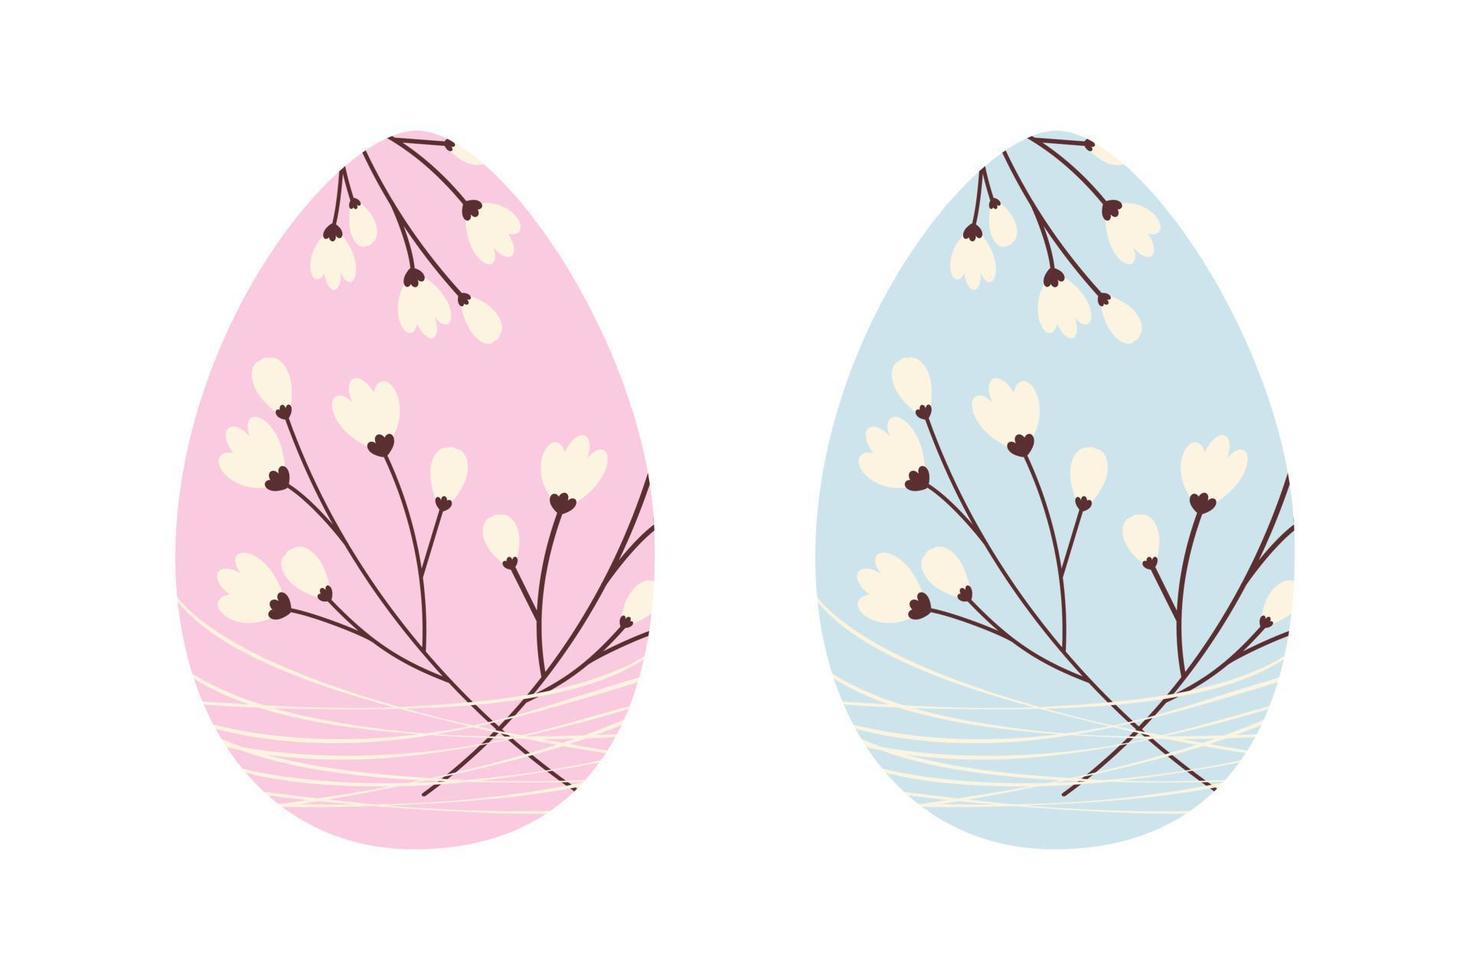 conjunto de dos Pascua de Resurrección huevos con modelo de Cereza ramas enredado con Delgado hilos en de moda sombras vector